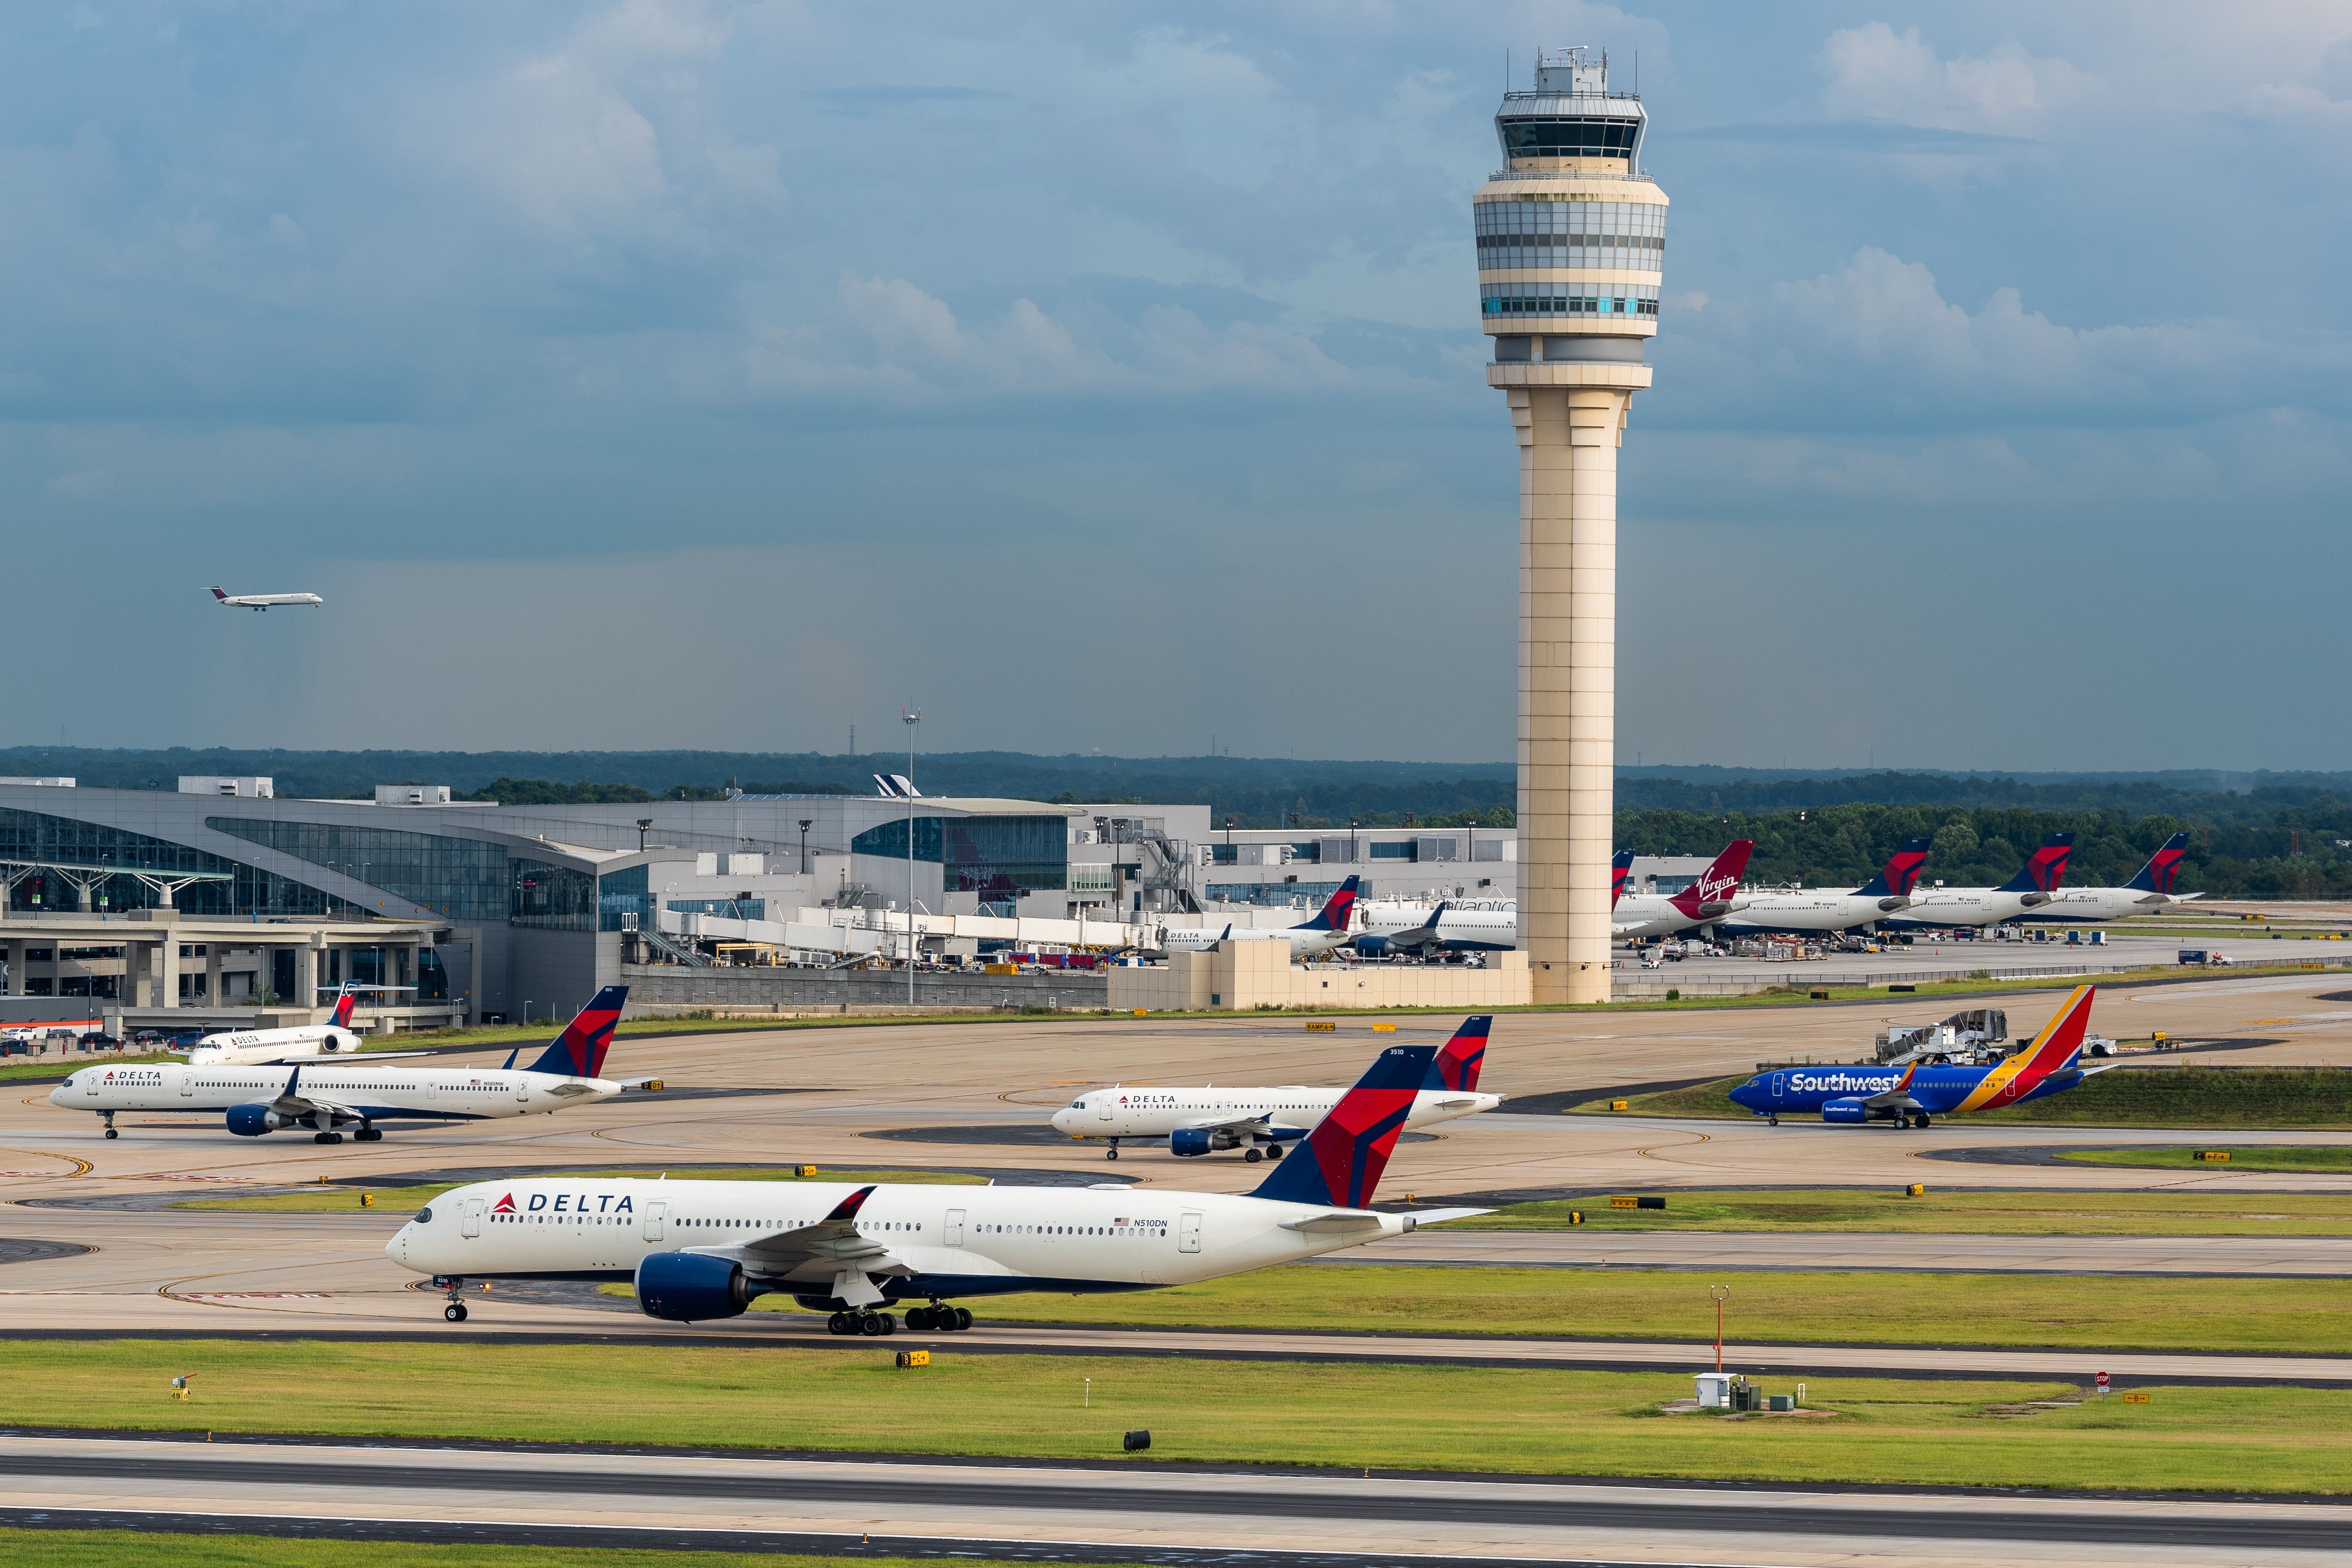 Delta Air Lines and Southwest planes at Atlanta Airport (ATL)